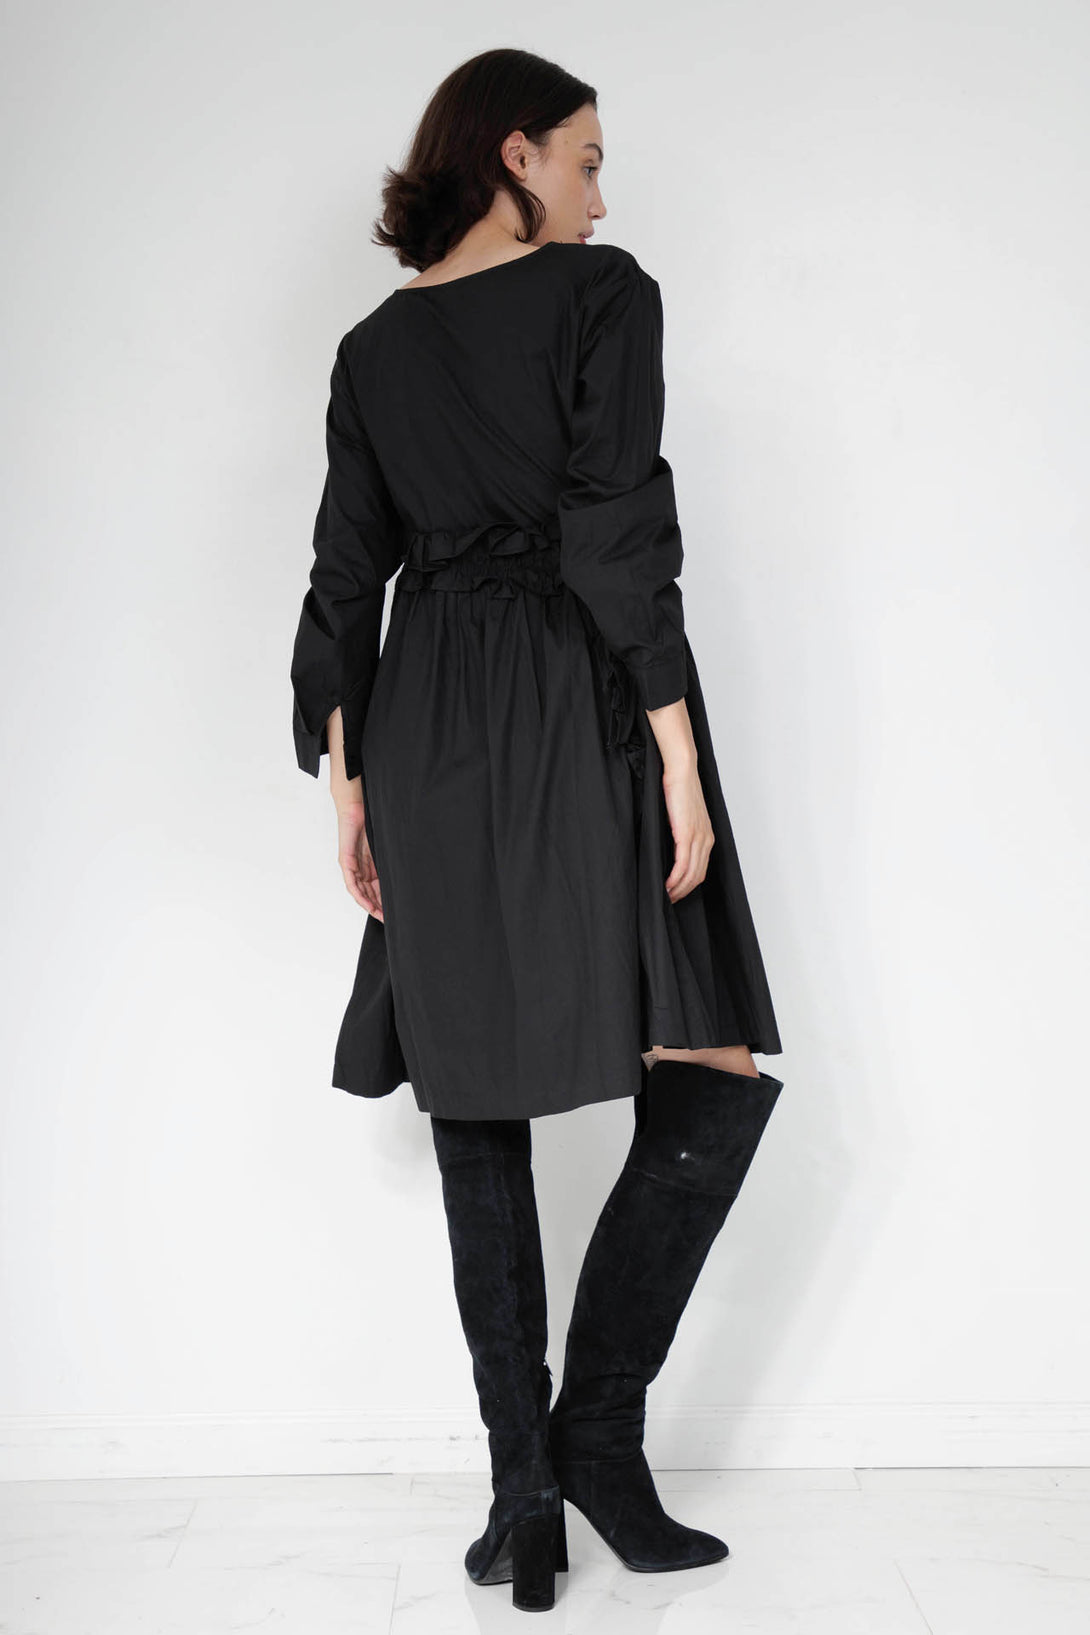 summer black midi dress, knee length prom dresses, sexy black midi dress, HT 360 Collective, 